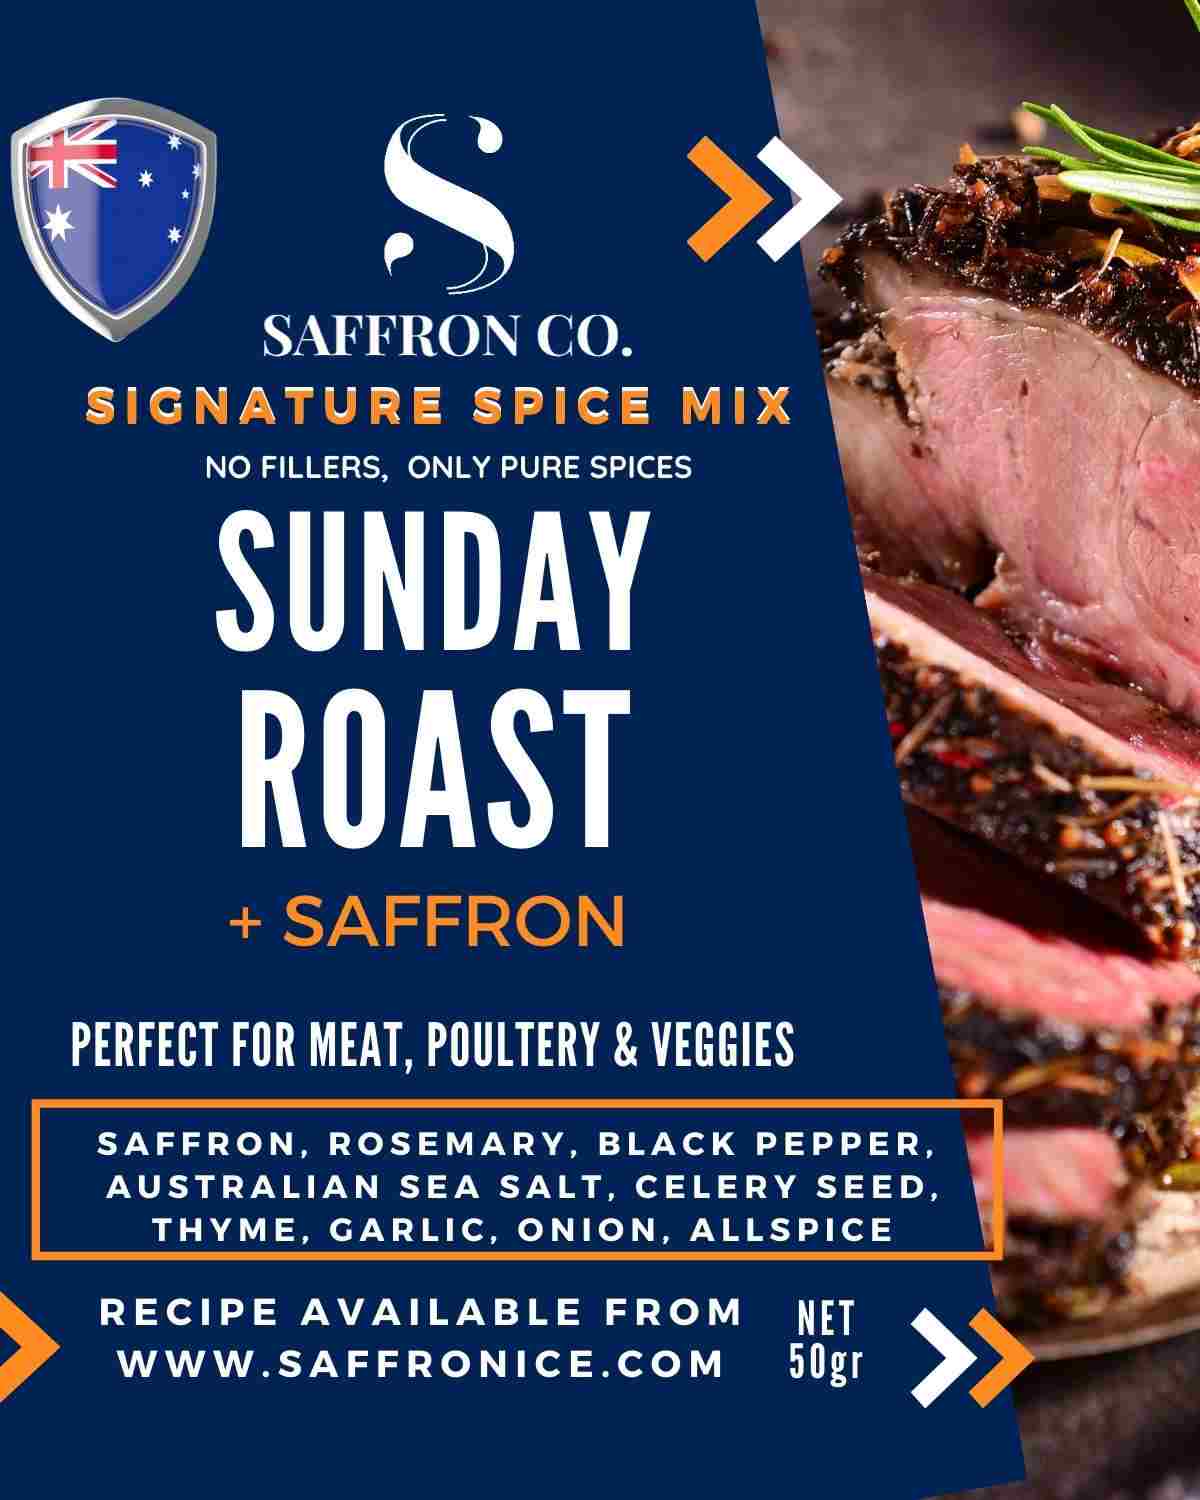 Sunday Roast Spice Mix with Saffron